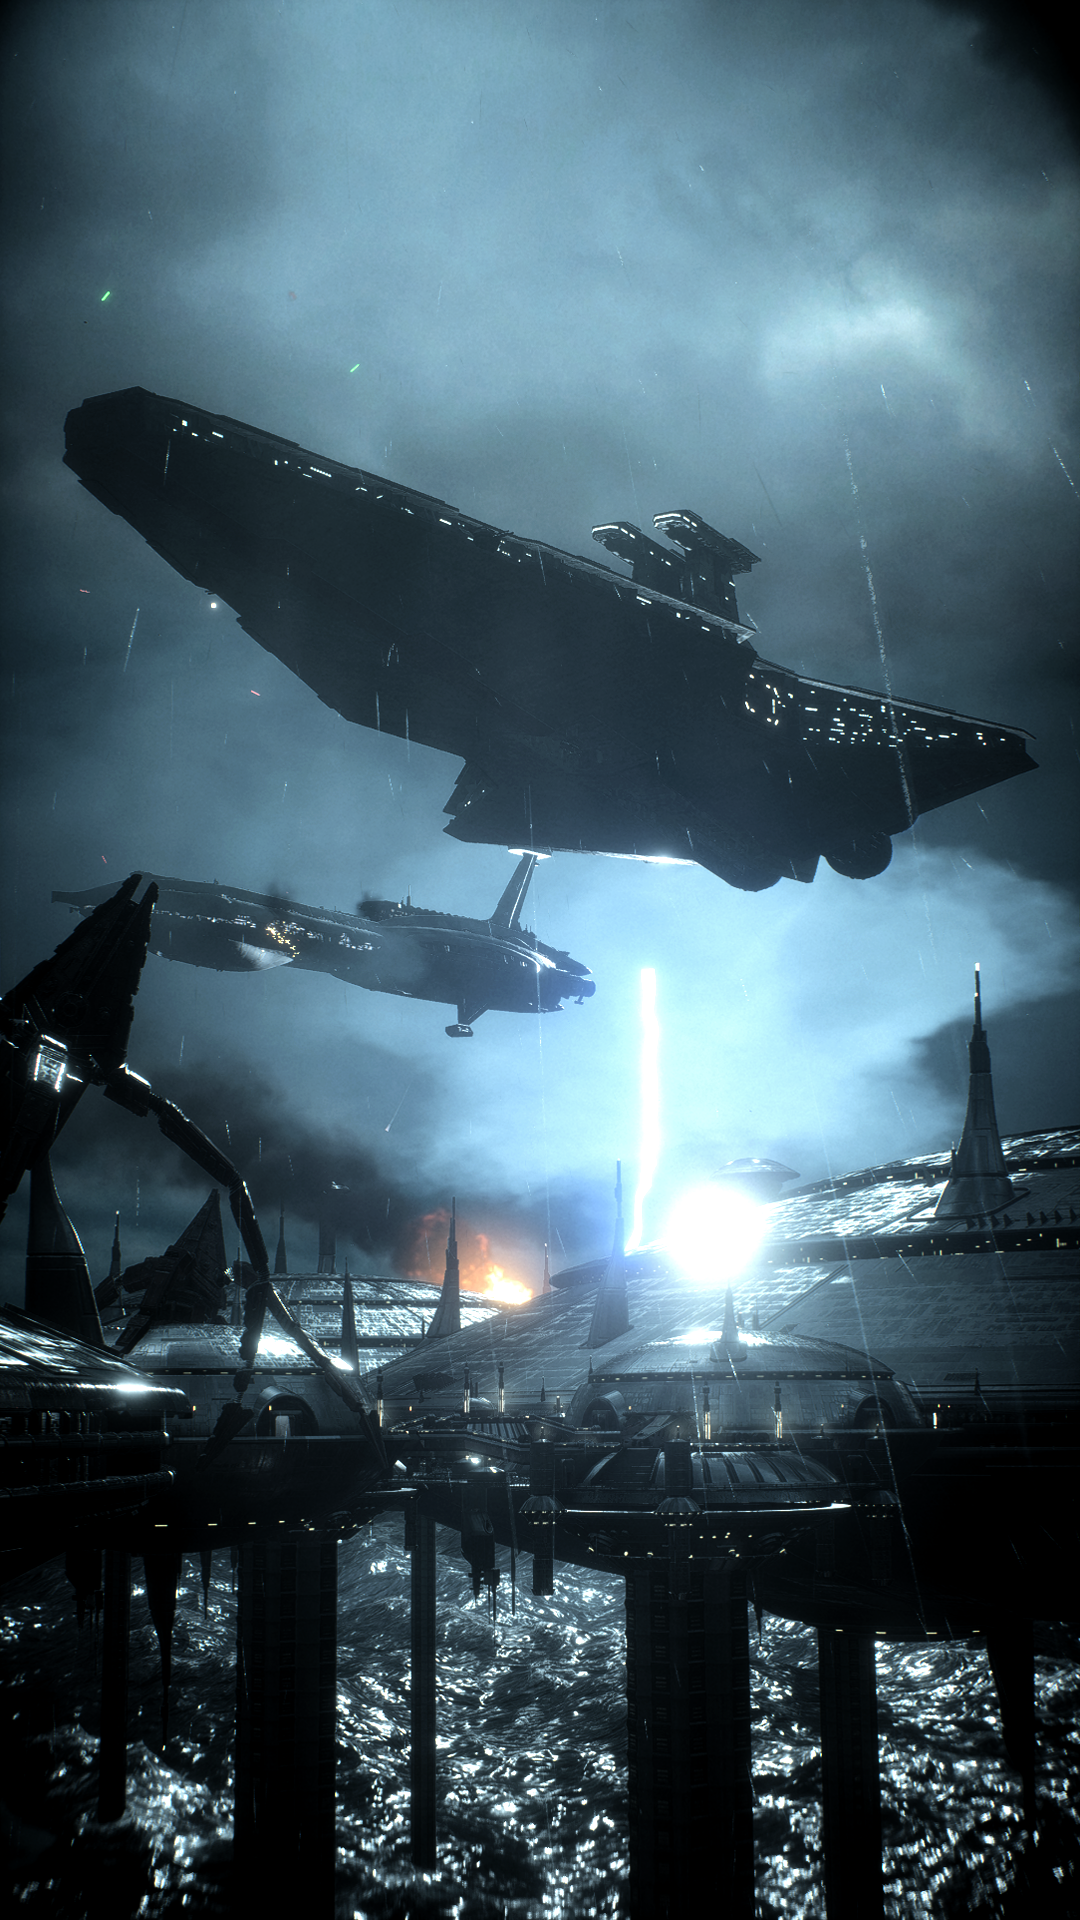 Scenery of Kamino Facility, StarWars. Star wars spaceships, Star wars image, Star wars background